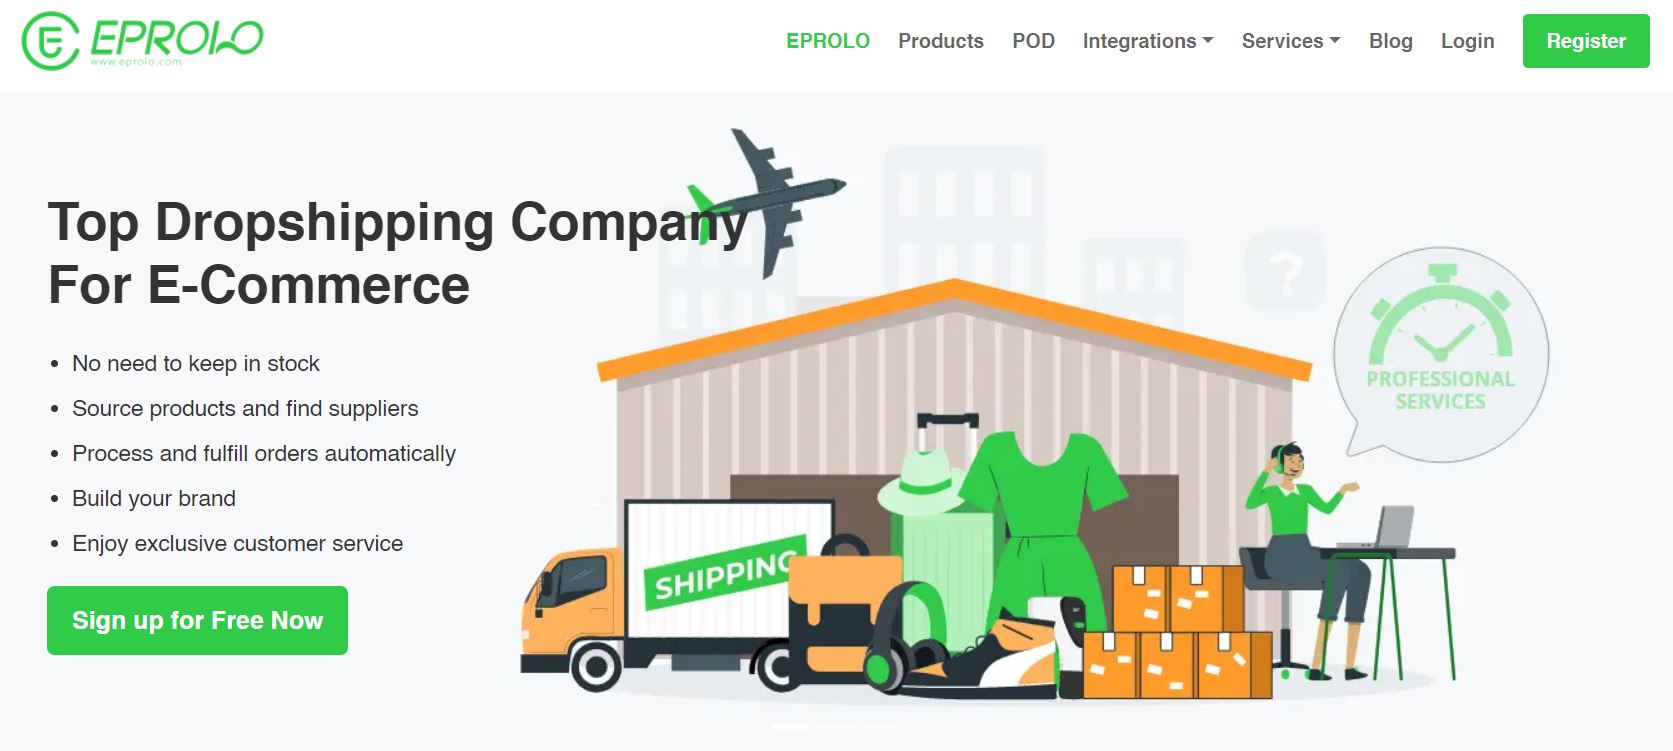 eprolo agence sourcing spécialisé dropshipping